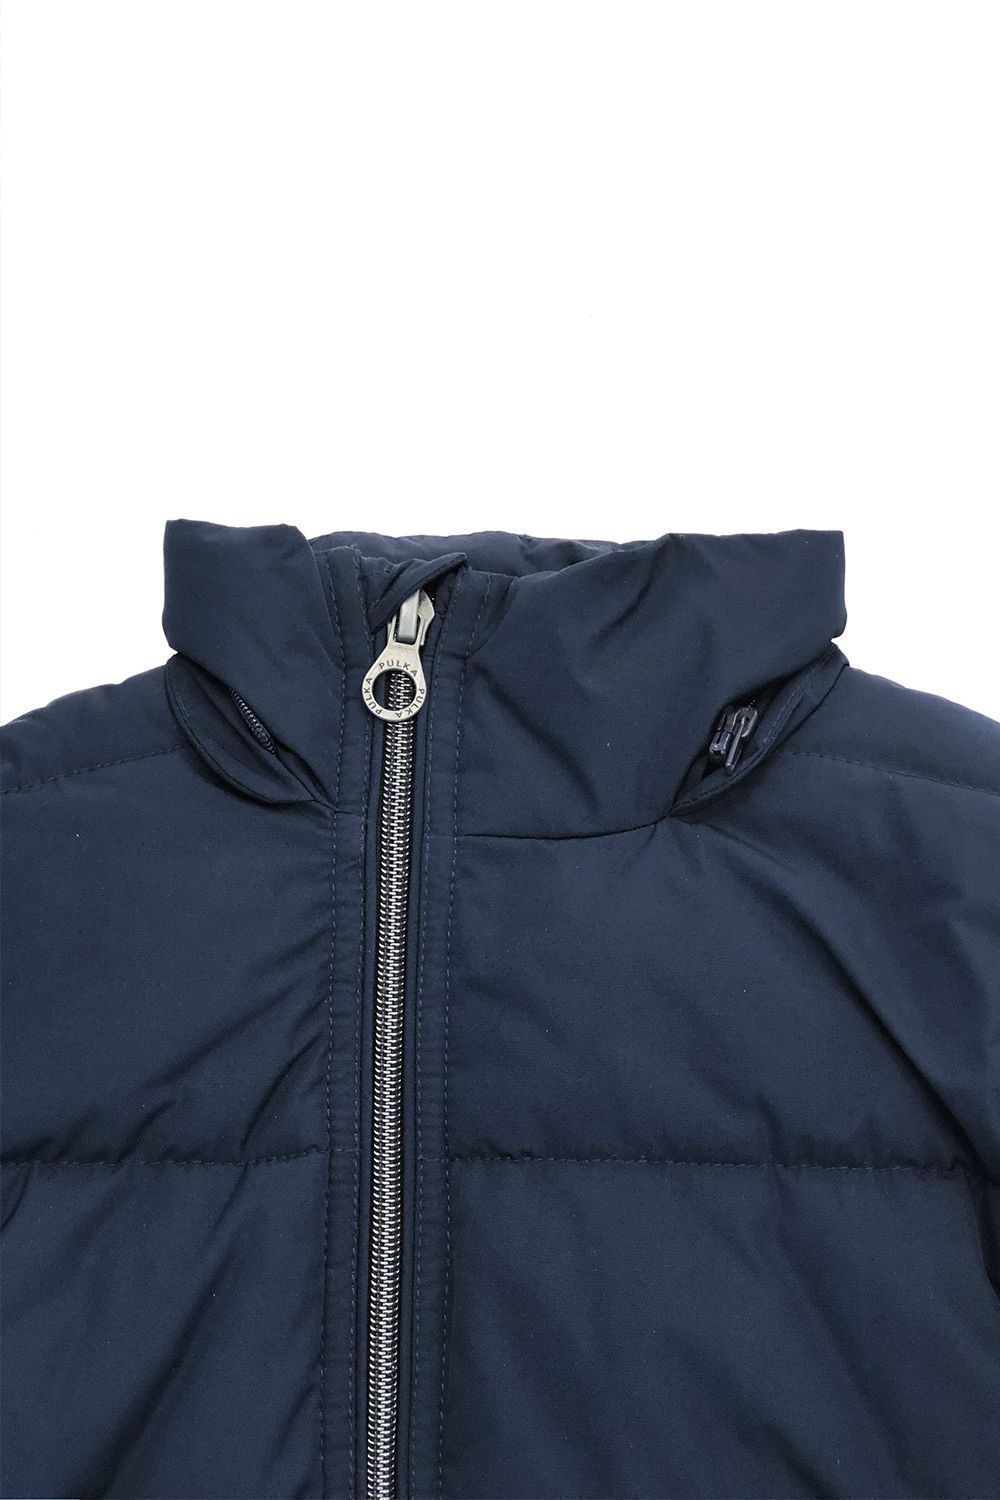 Куртка Pulka, размер 98, цвет синий PUFWB-916-10119-326 - фото 5